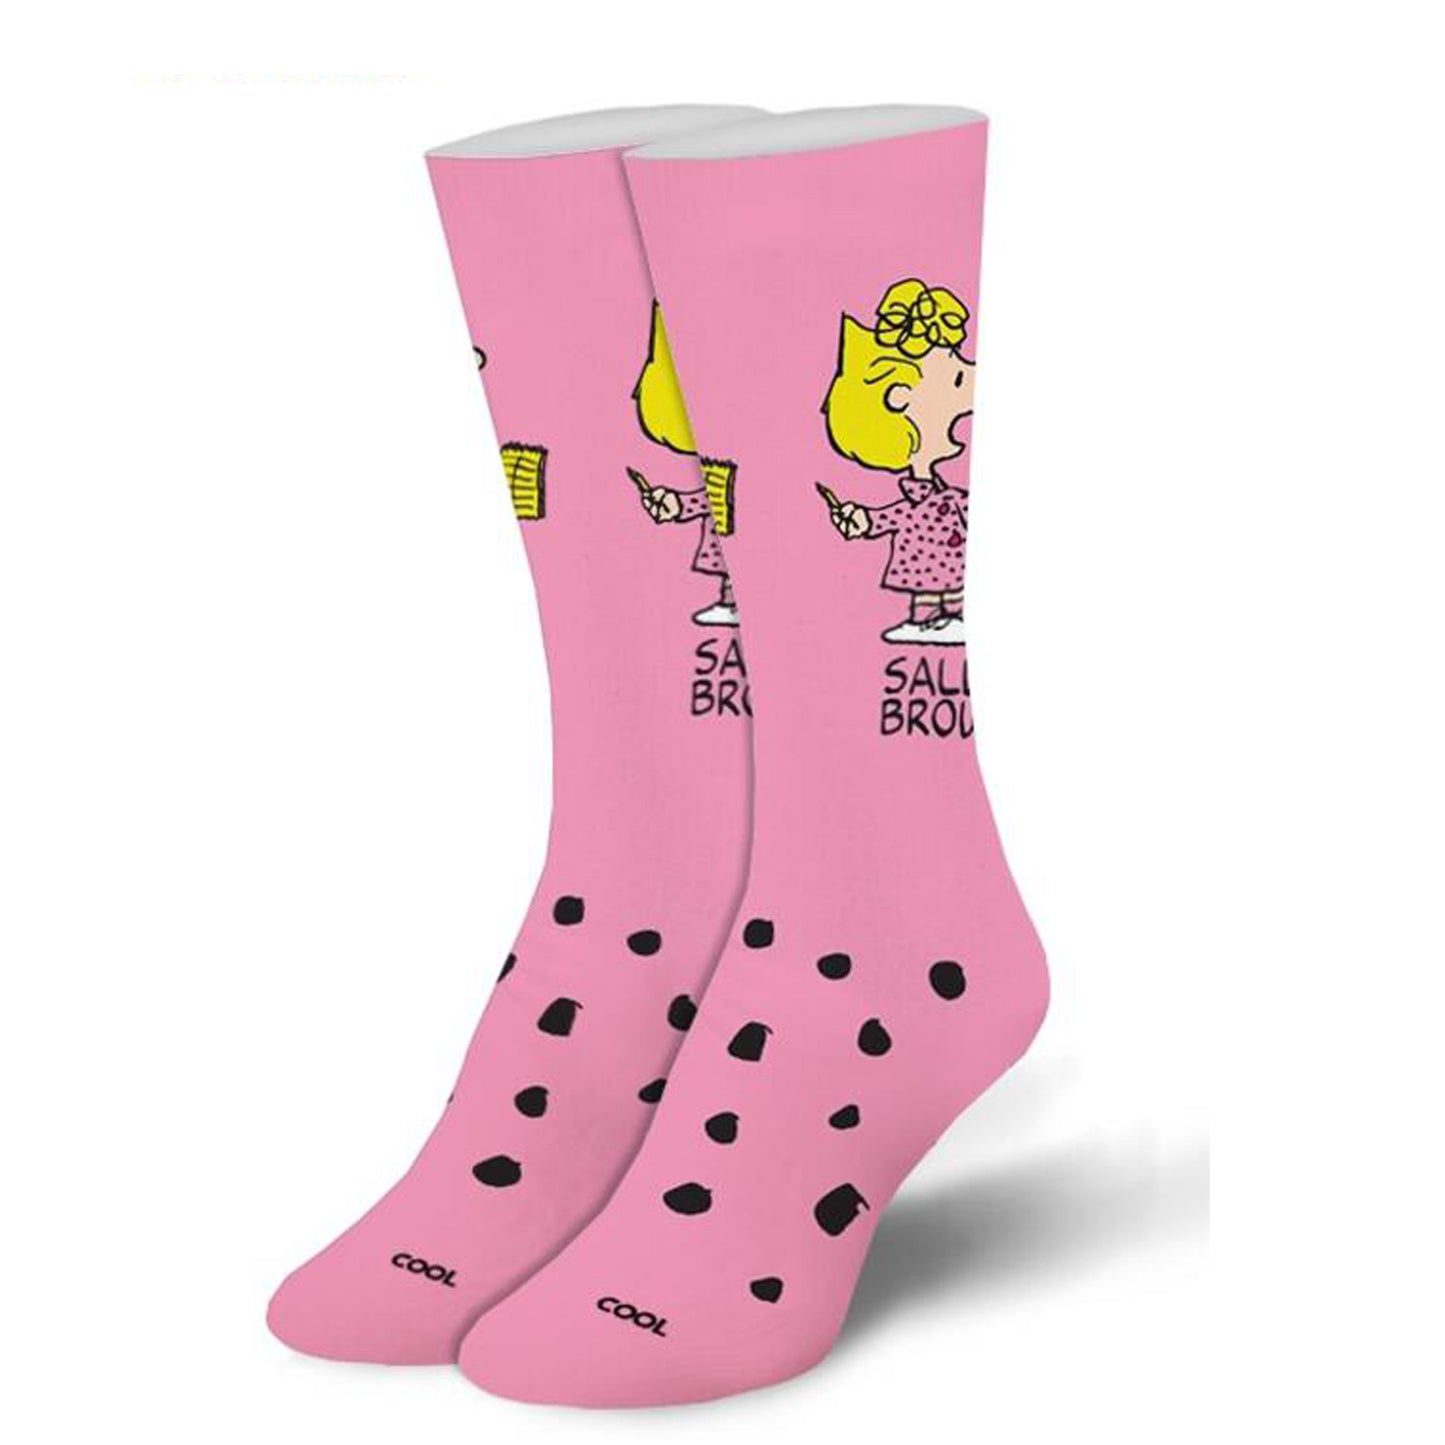 Cool Socks Women's Crew Socks - Sally Brown (Peanuts)